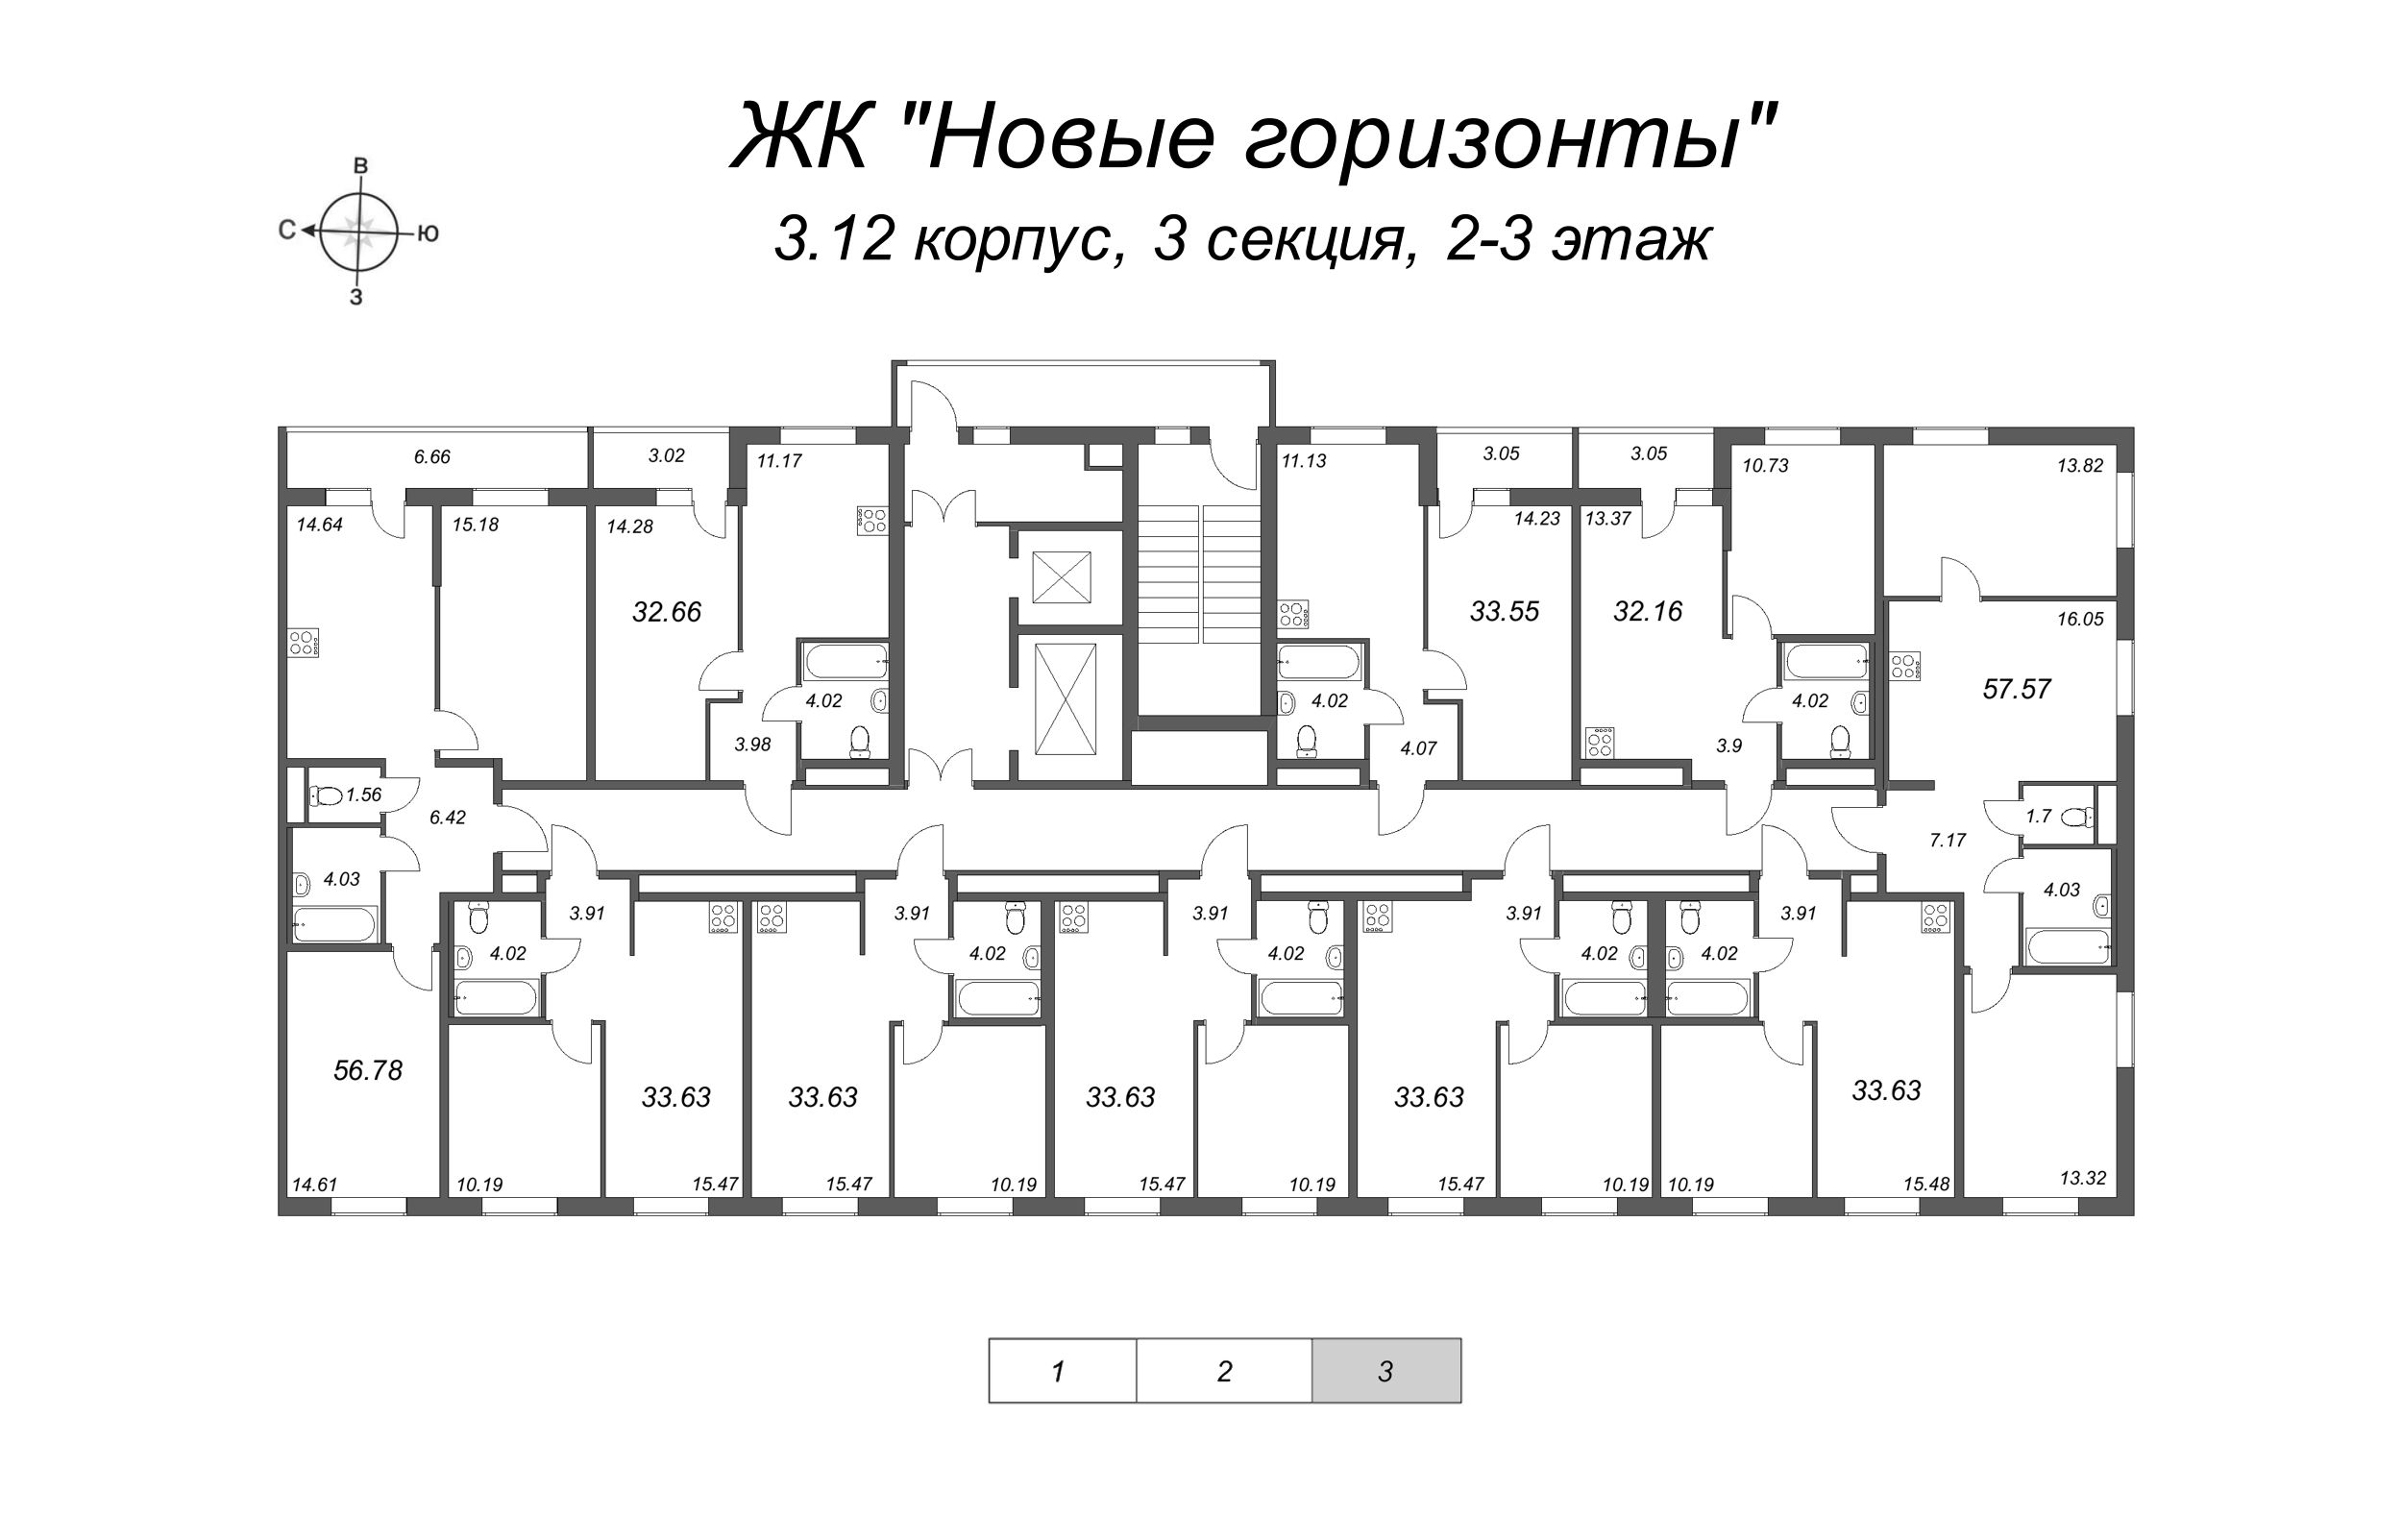 3-комнатная (Евро) квартира, 57.57 м² - планировка этажа